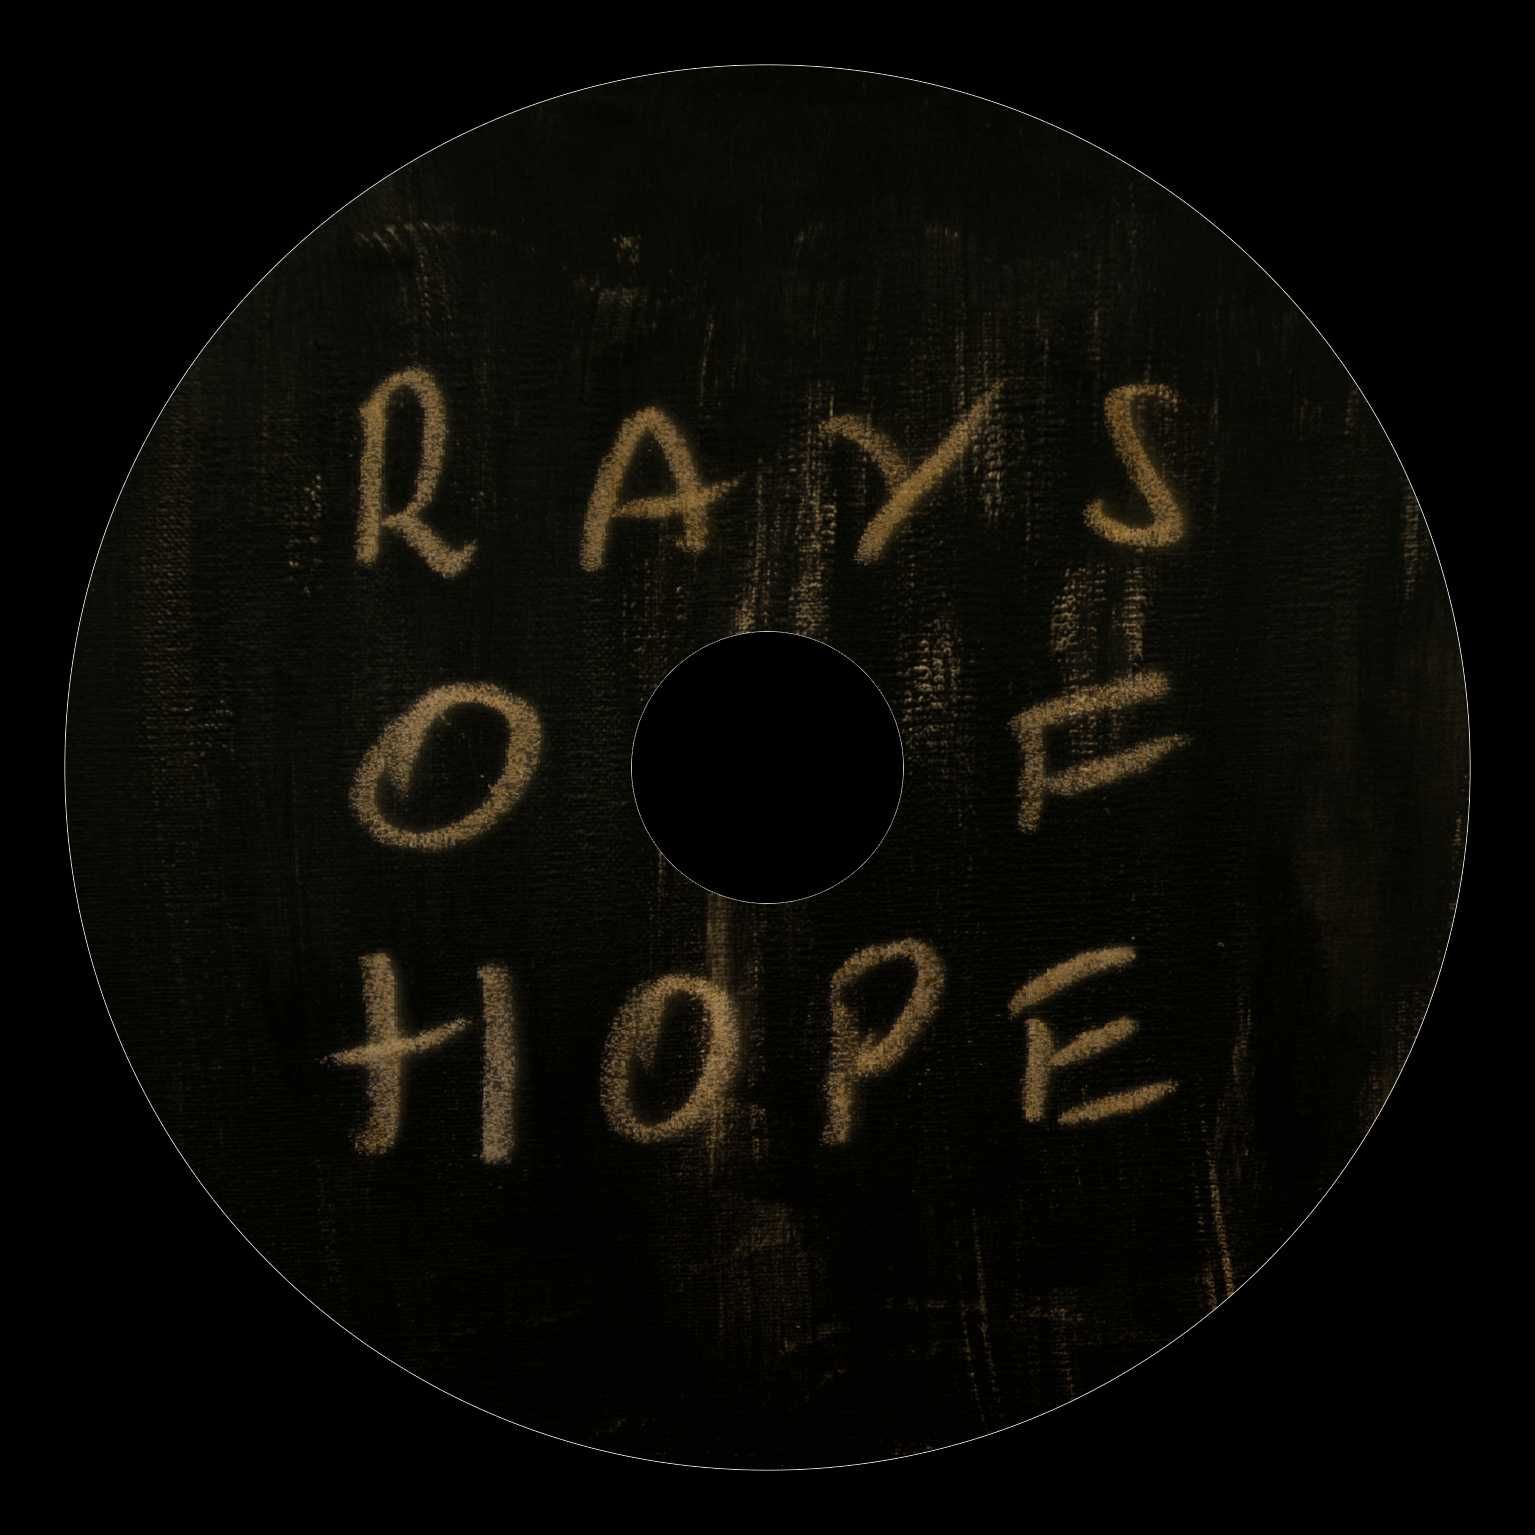 Płyta CD - Mateusz Tranda "Rays of Hope"